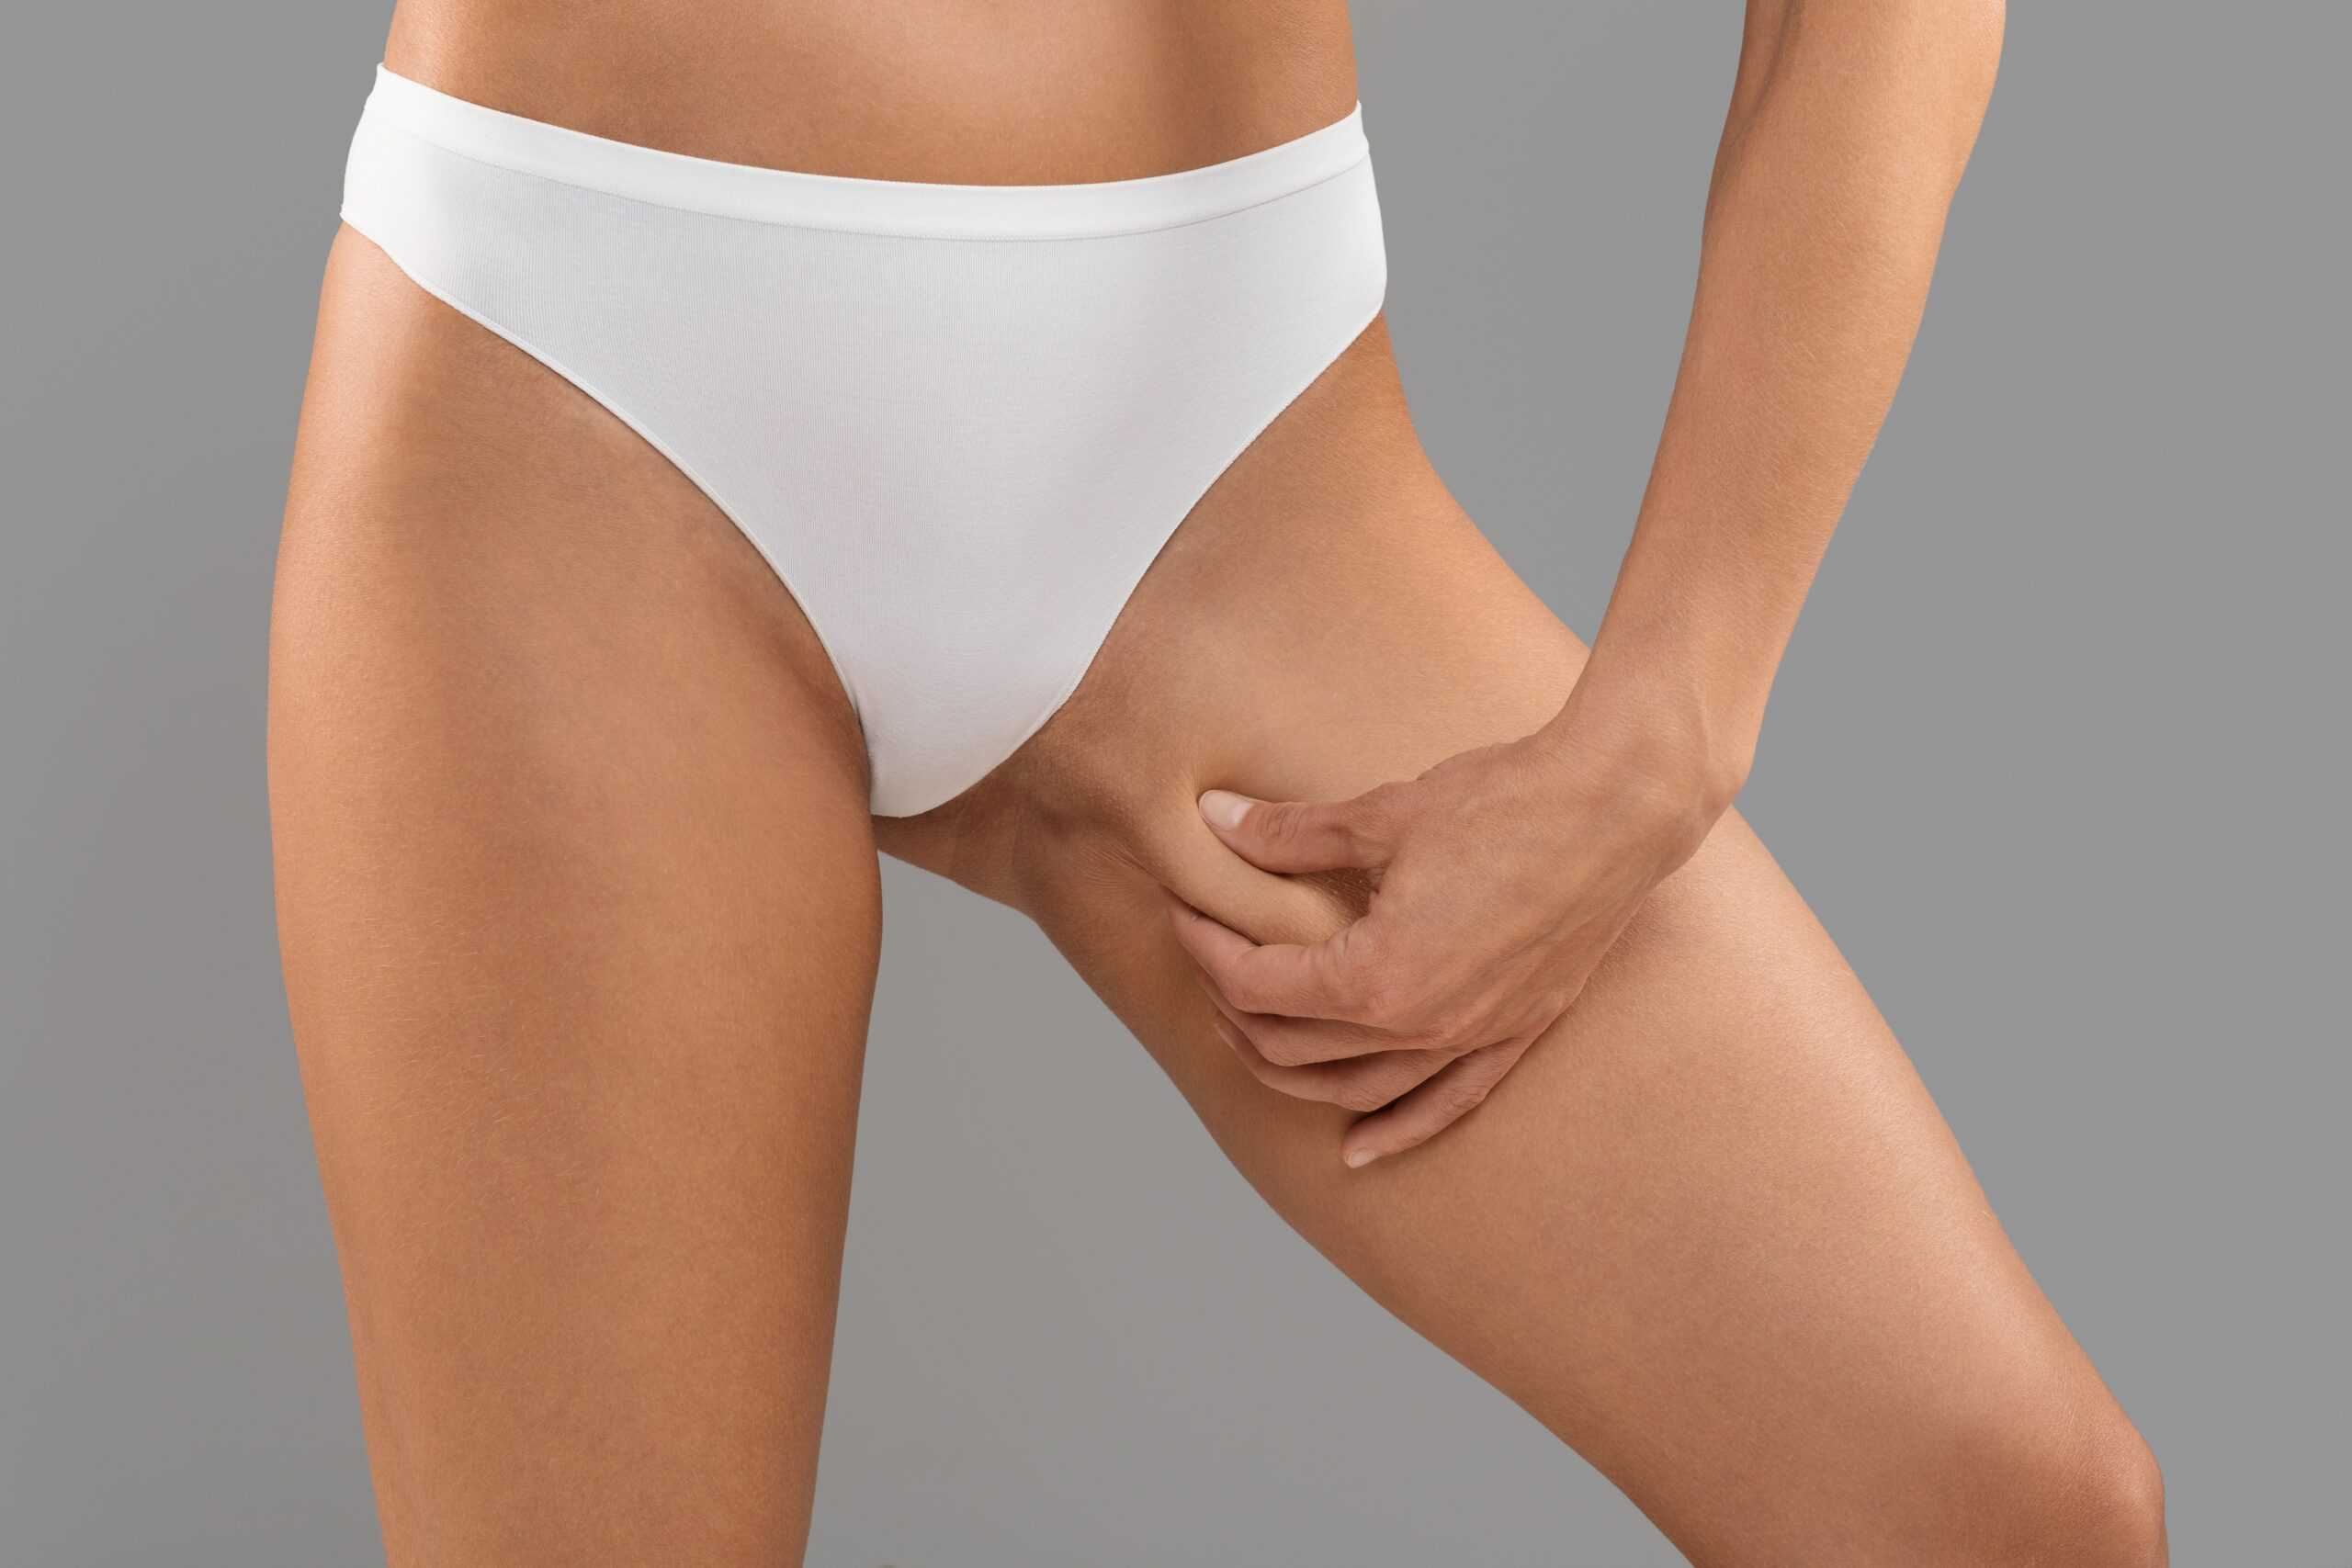 A woman in a white bikini bottom pinching the skin on her upper thigh